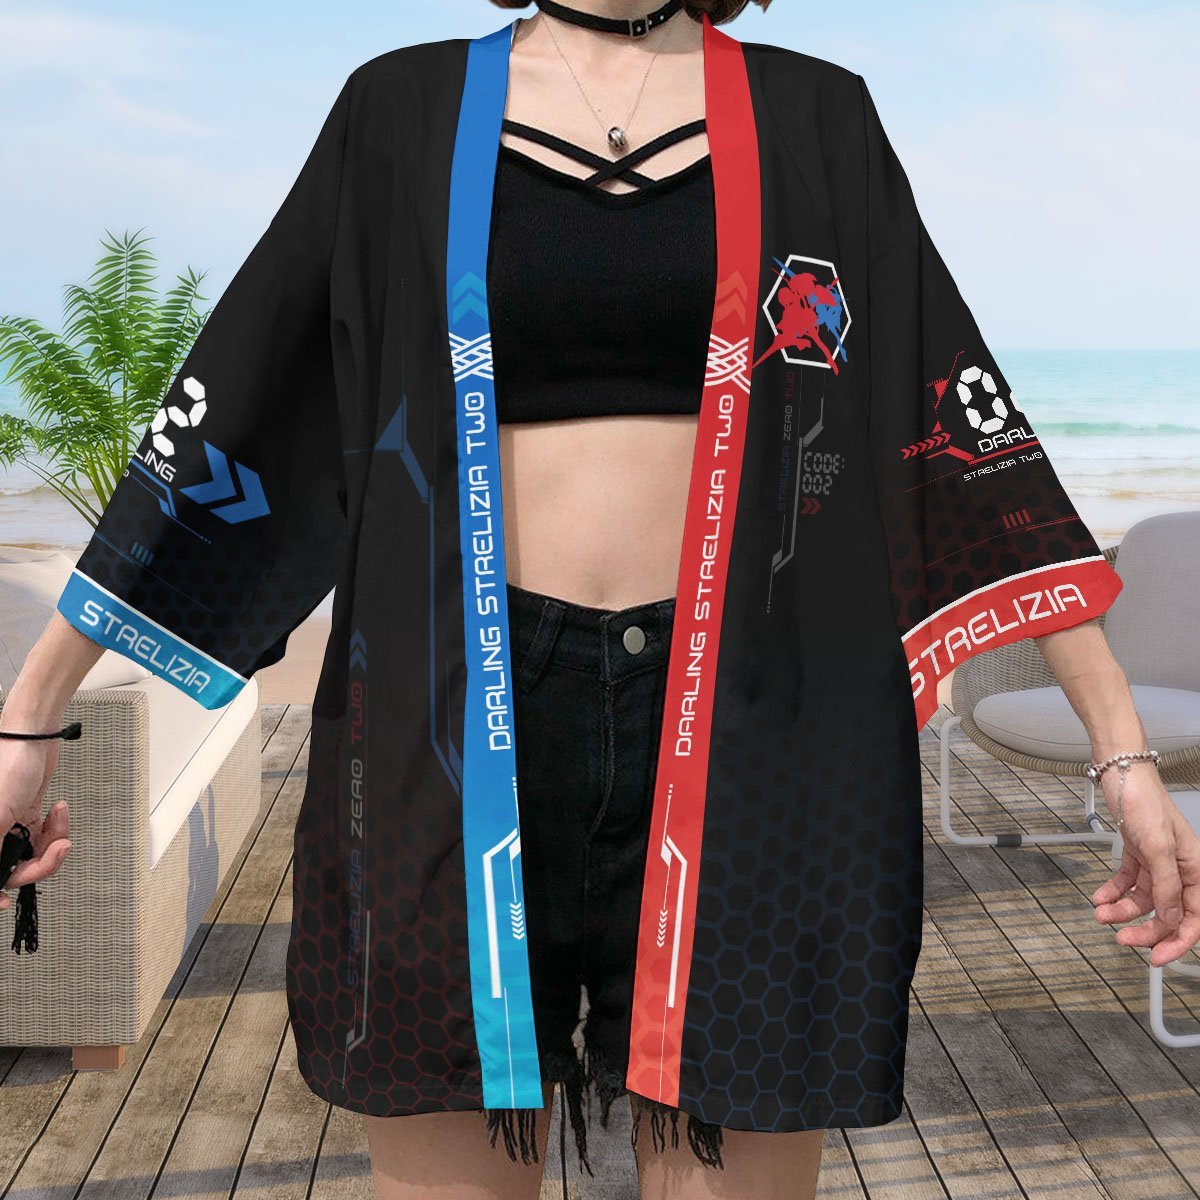 002 Strelizia Kimono